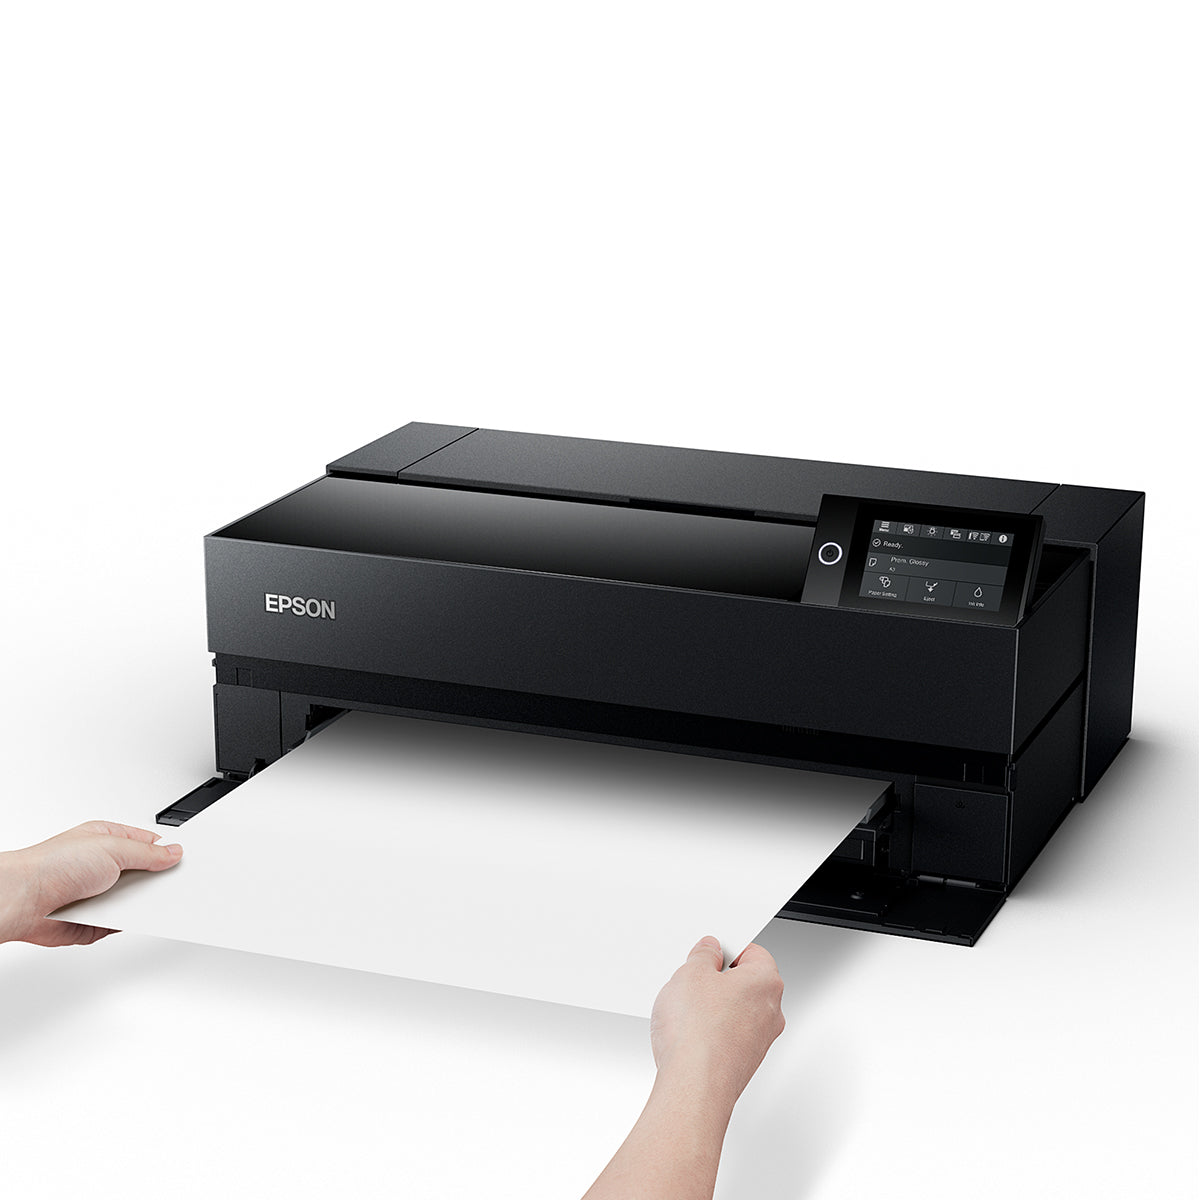 Epson SureColor P900 Printer